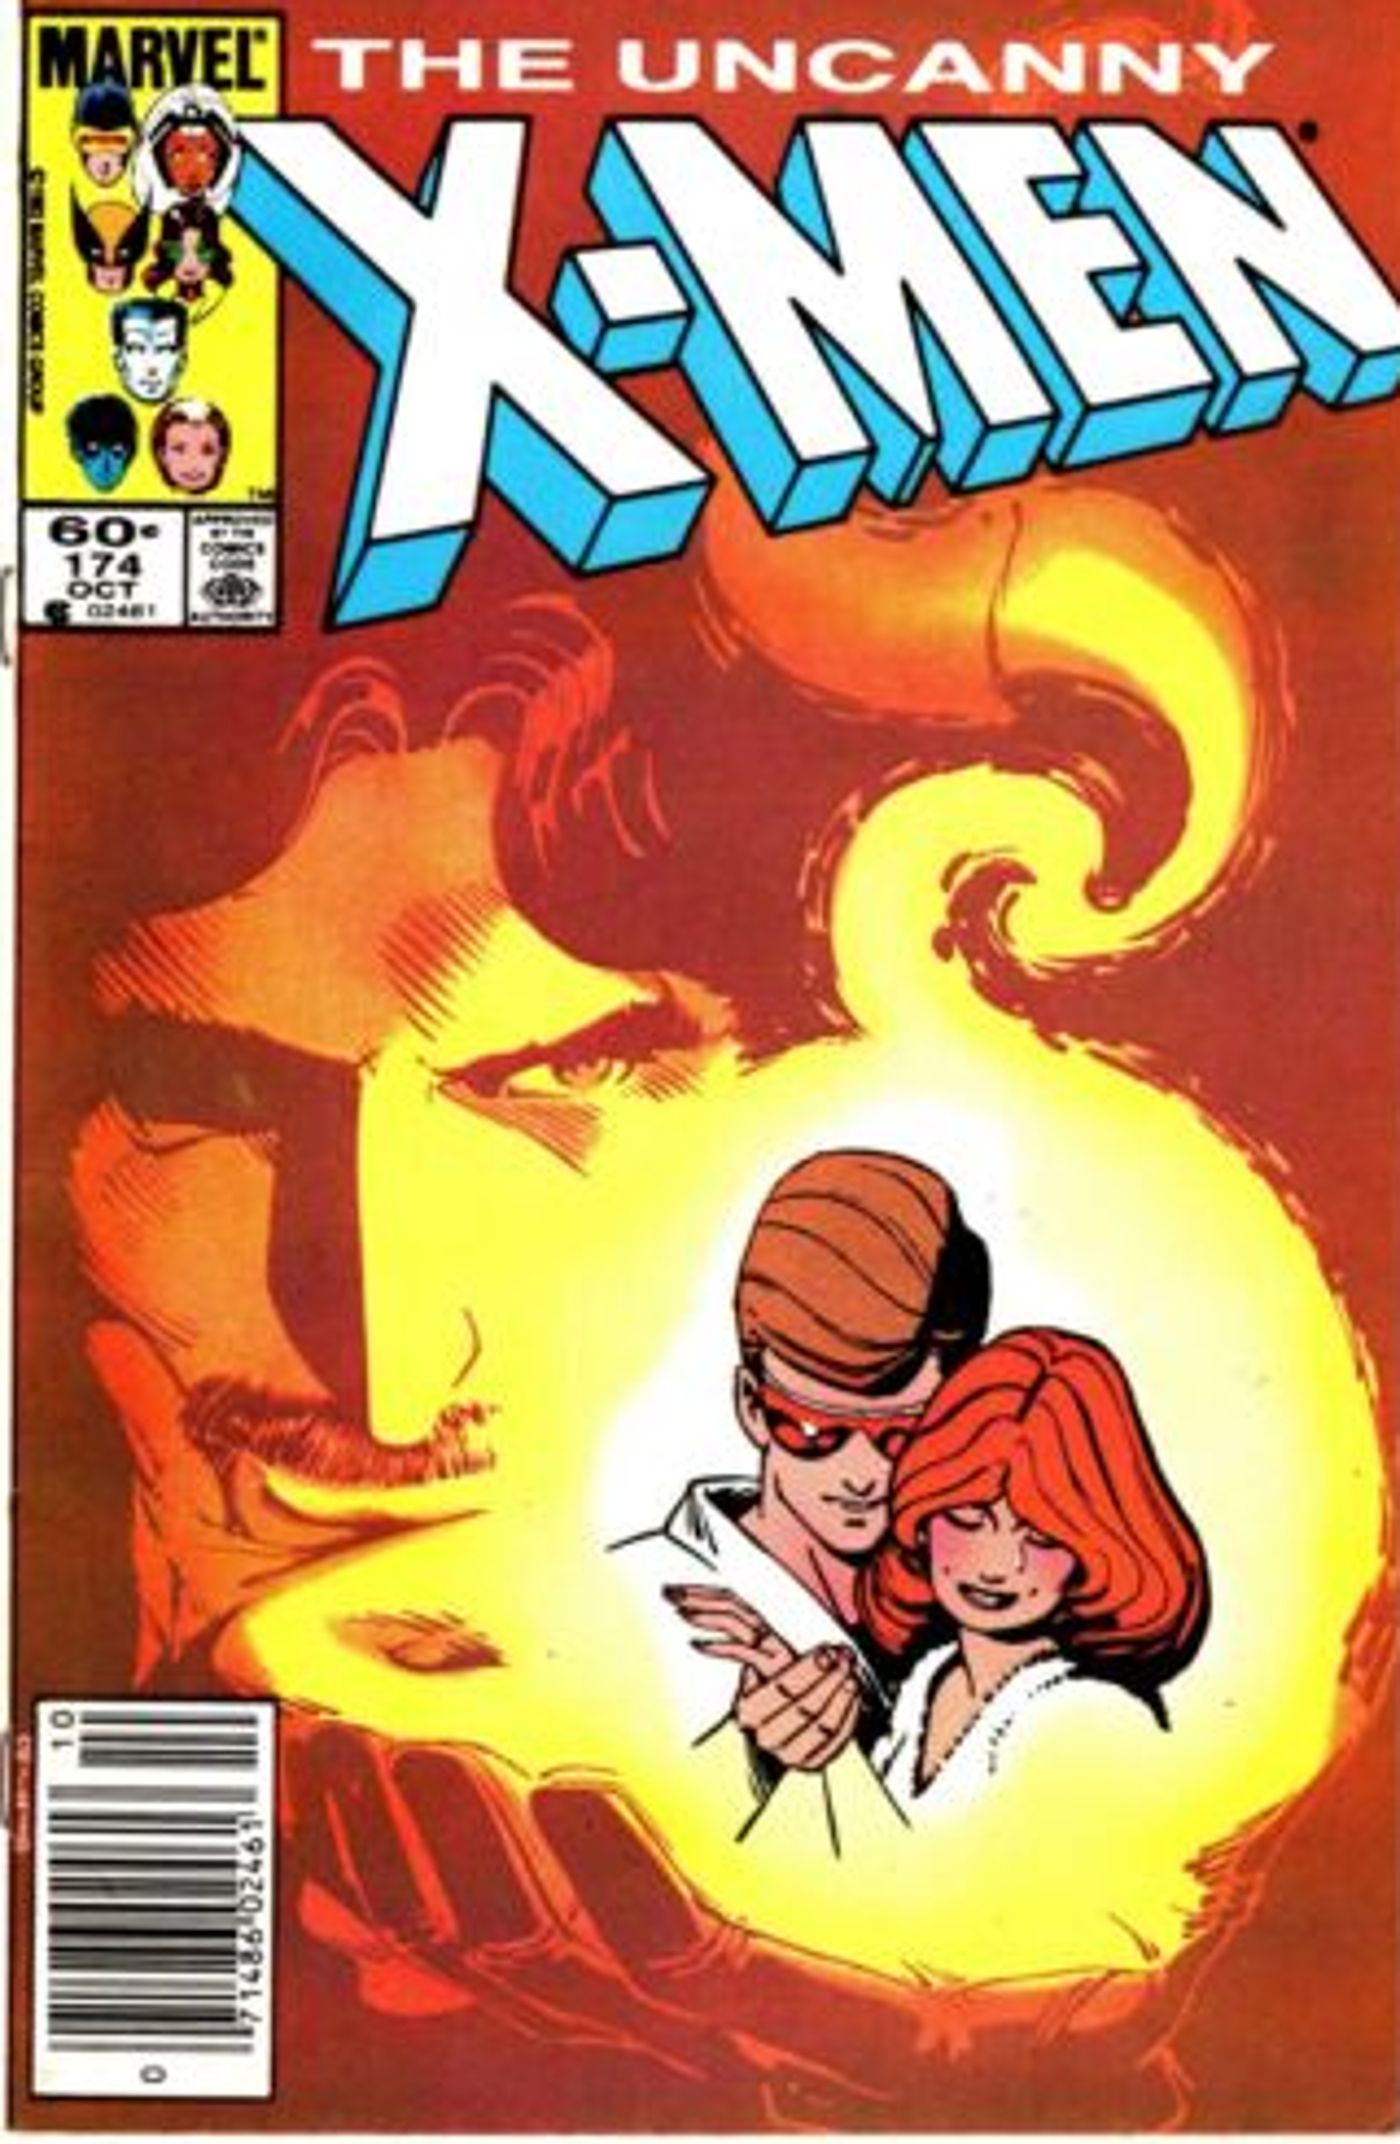 Portada de Uncanny X-Men #164, Scott y Madelyne Pryor